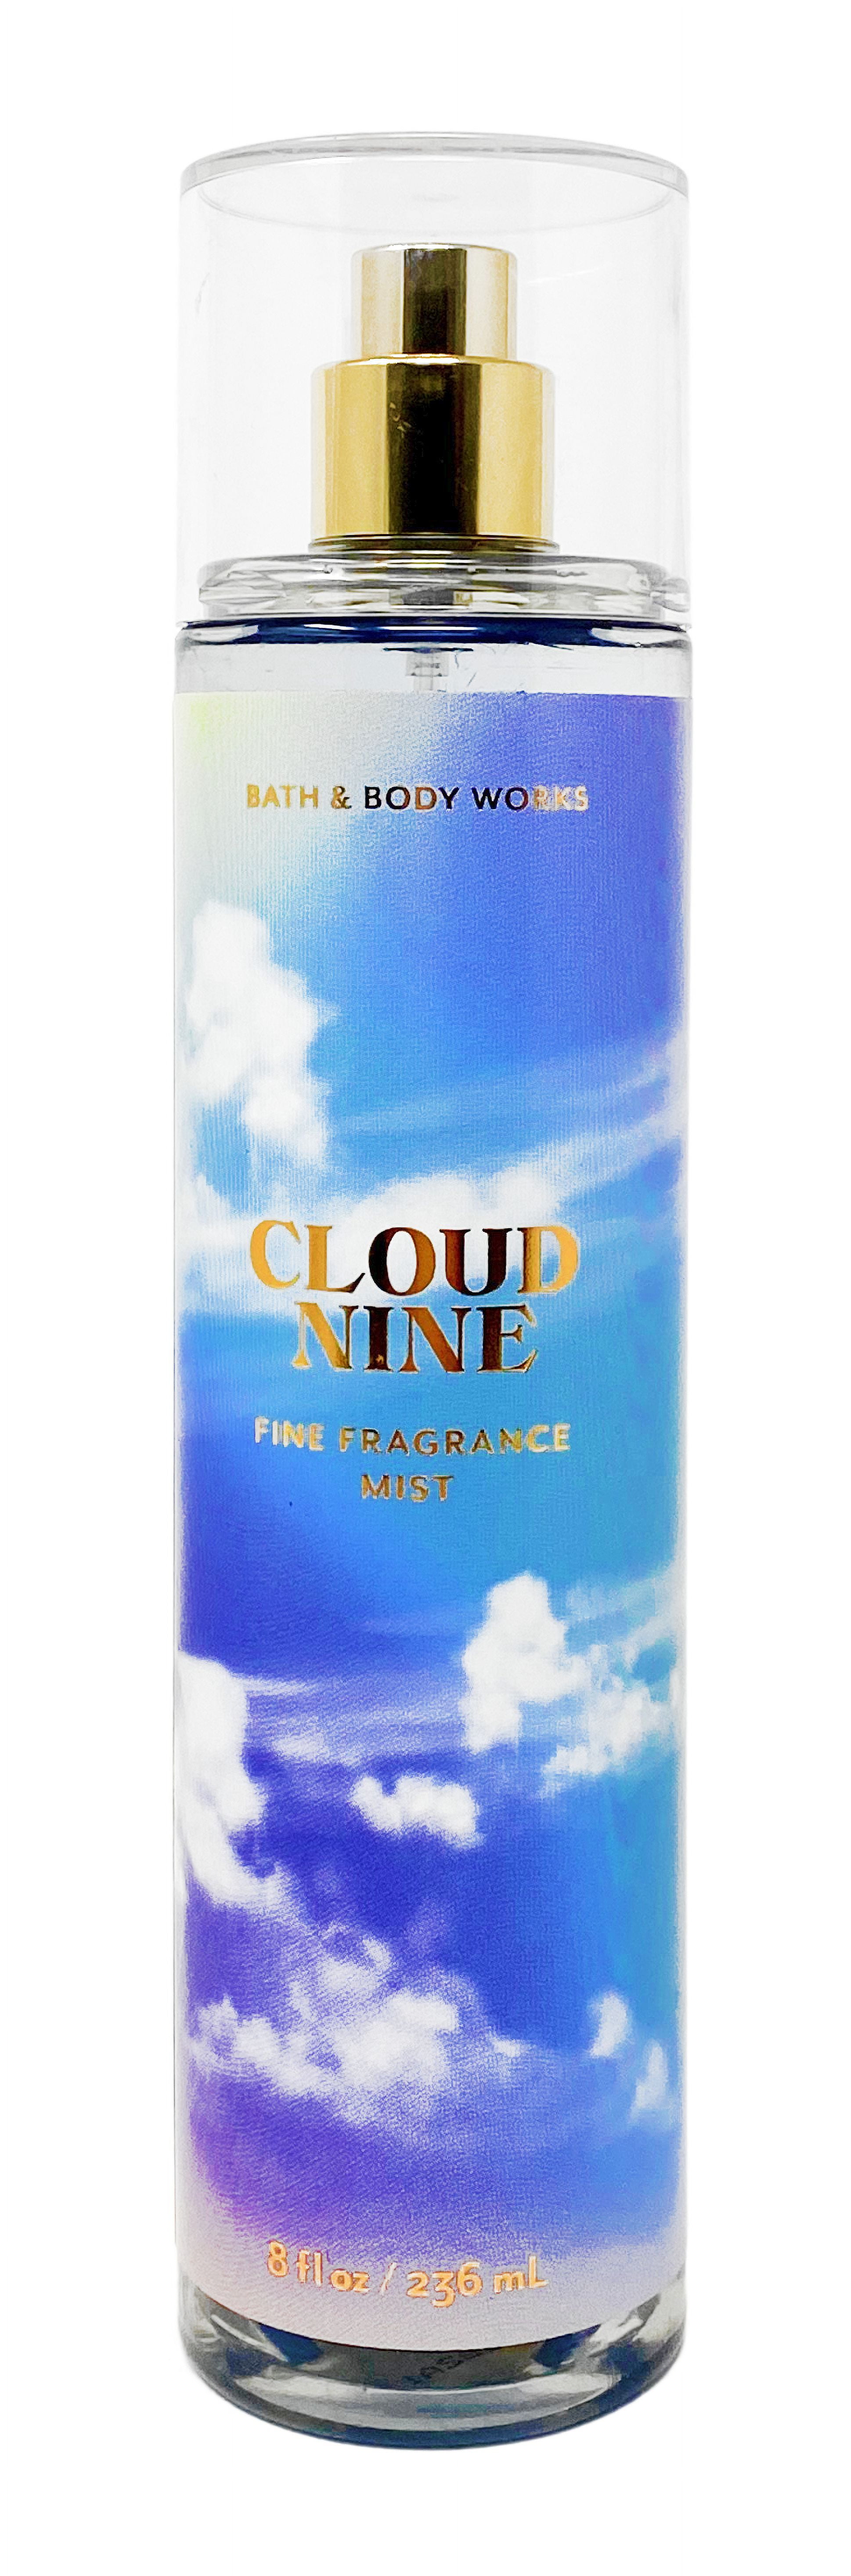 Cloud Nine Fine Fragrance Mist